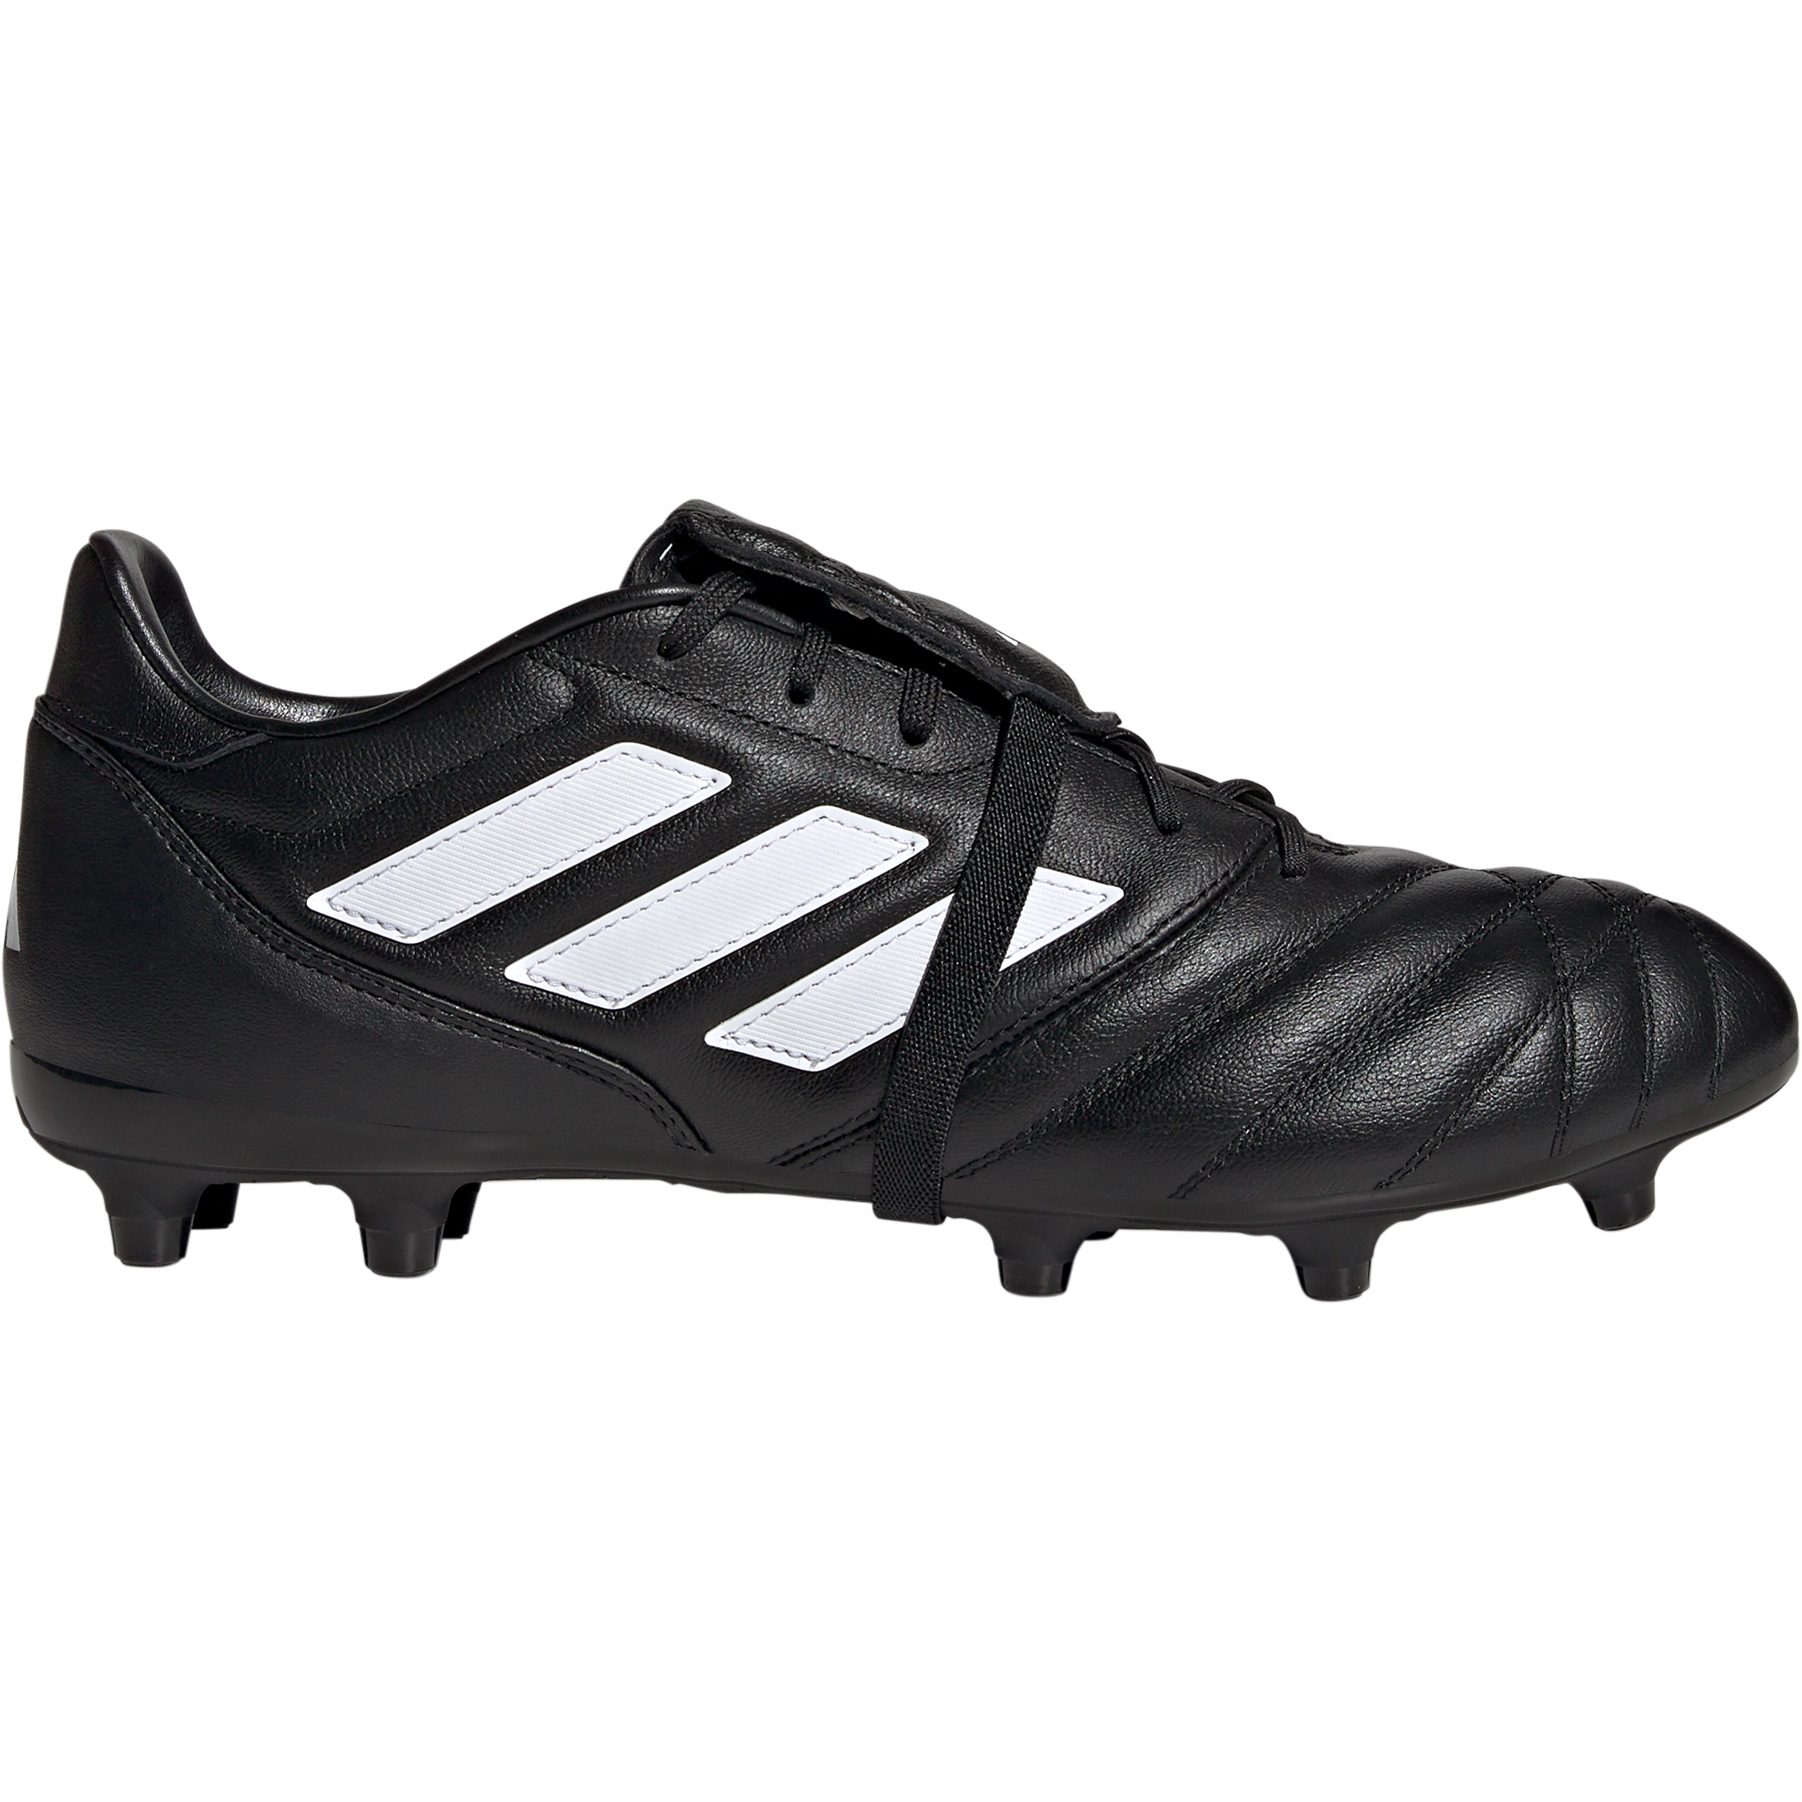 adidas - Copa Gloro FG Football Shoes core black at Sport Bittl Shop